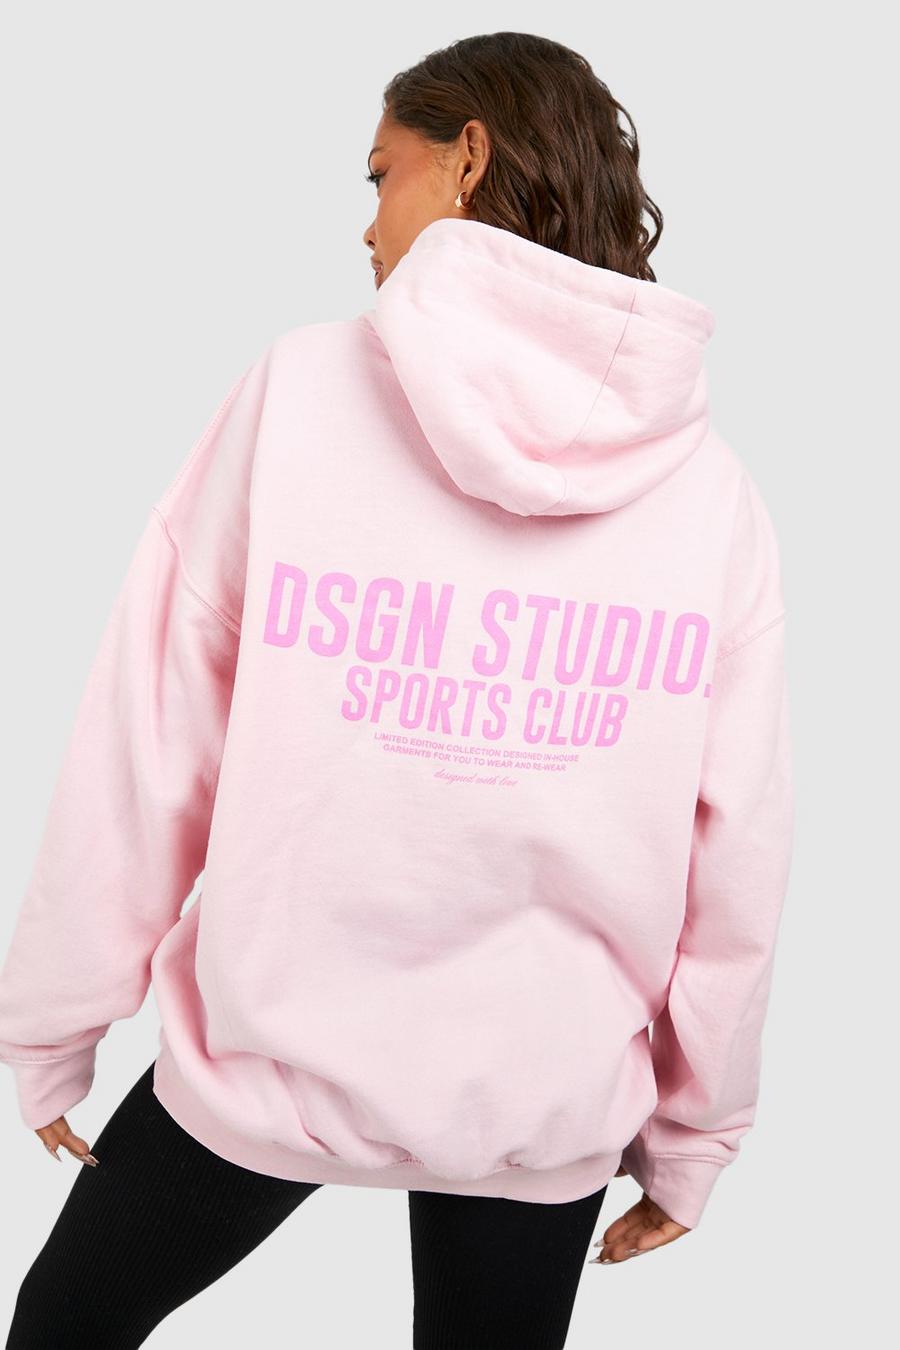 Sudadera oversize con capucha y eslogan Dsgn Studio Sports Club, Light pink image number 1